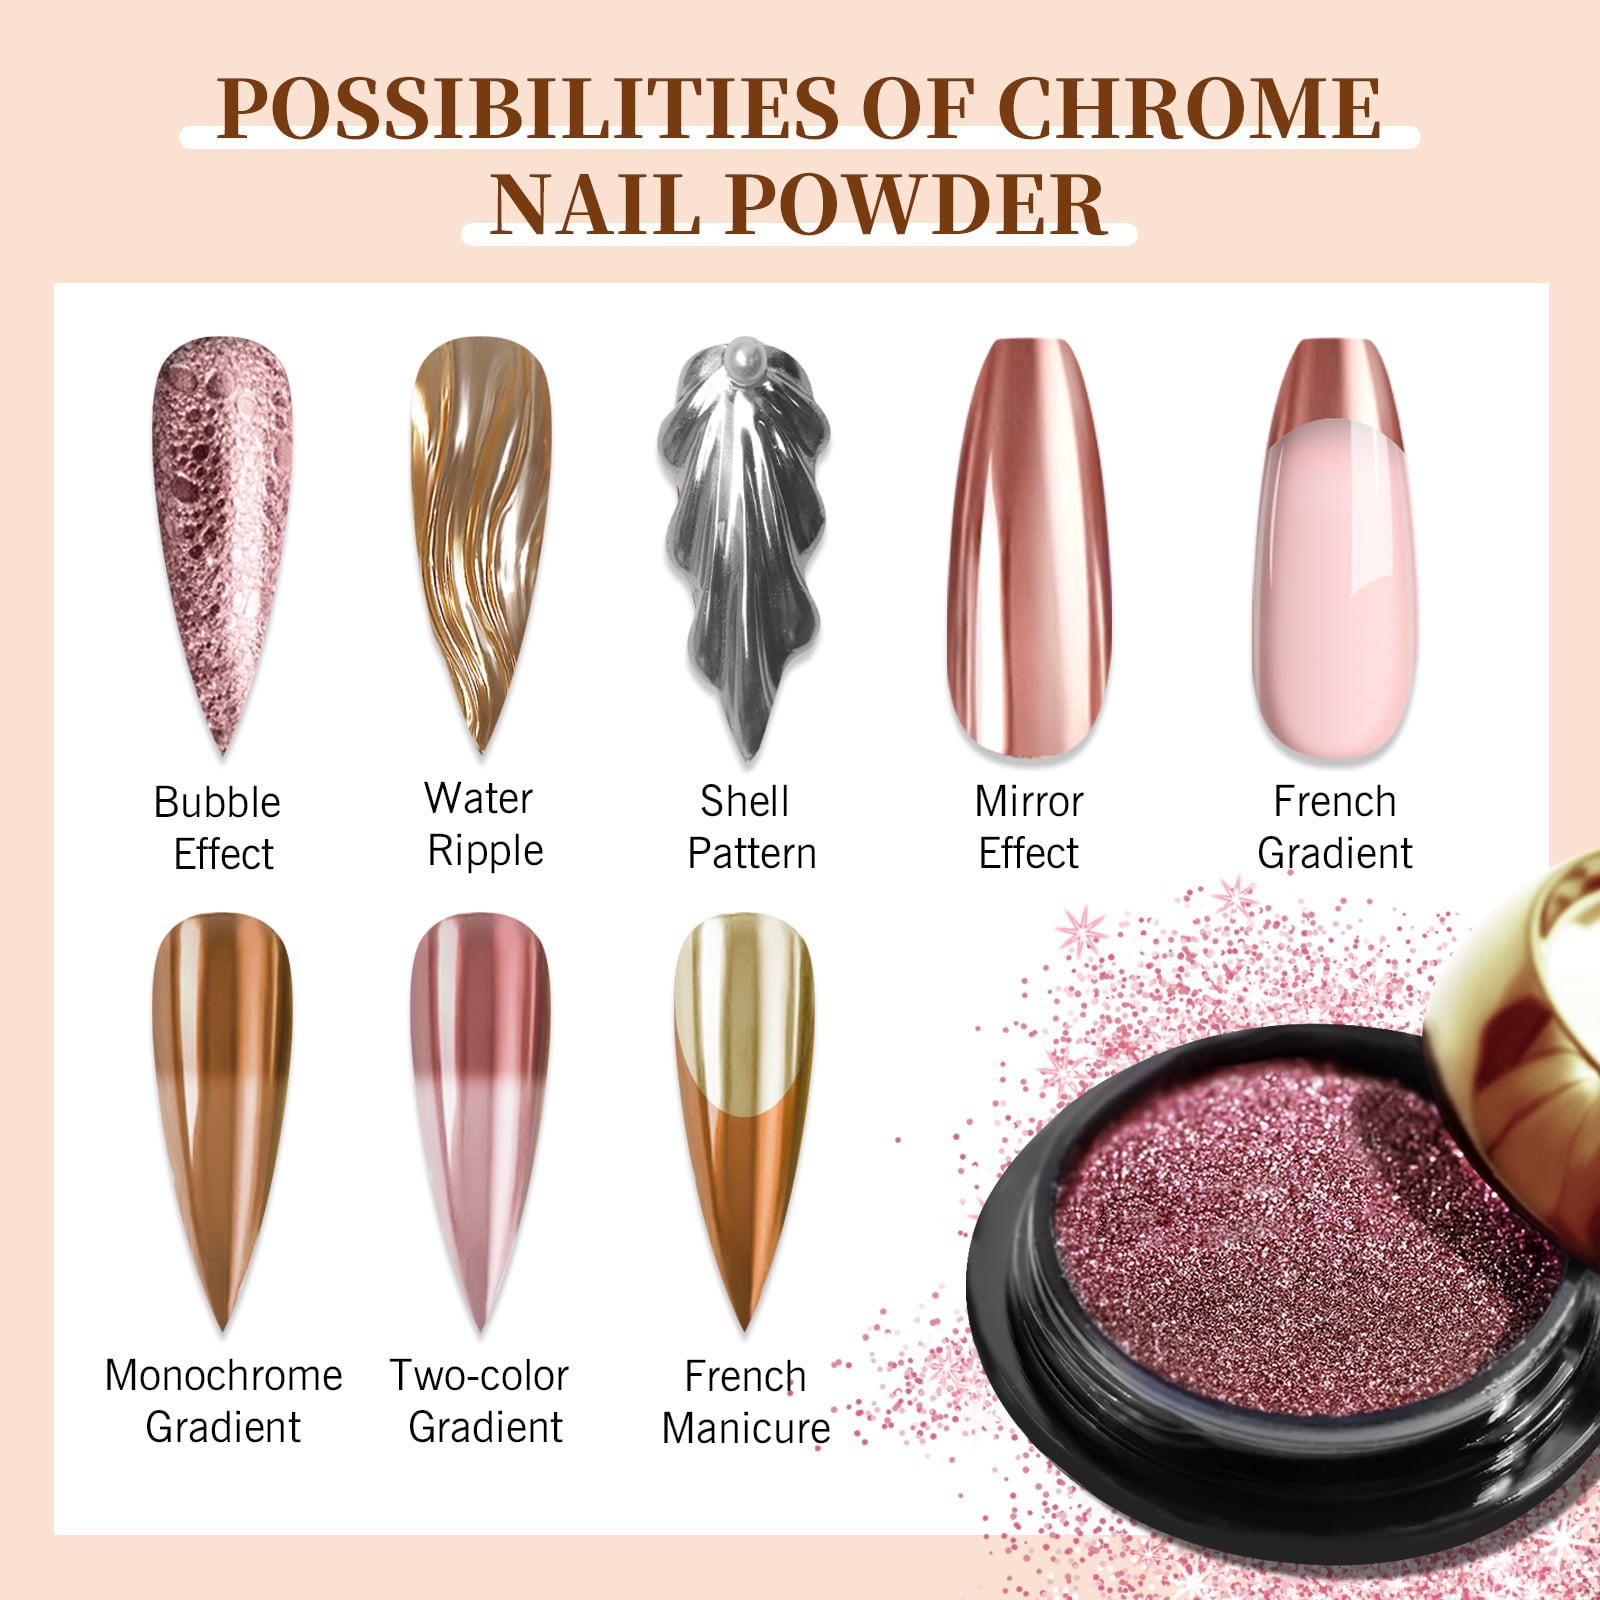 Saviland 6pcs Chrome Nail Powder Set - Rose Gold Chrome Nail Powder Metallic Mirror Manicure Pigment for Nail Decoration, Adult Unisex, Size: One Size